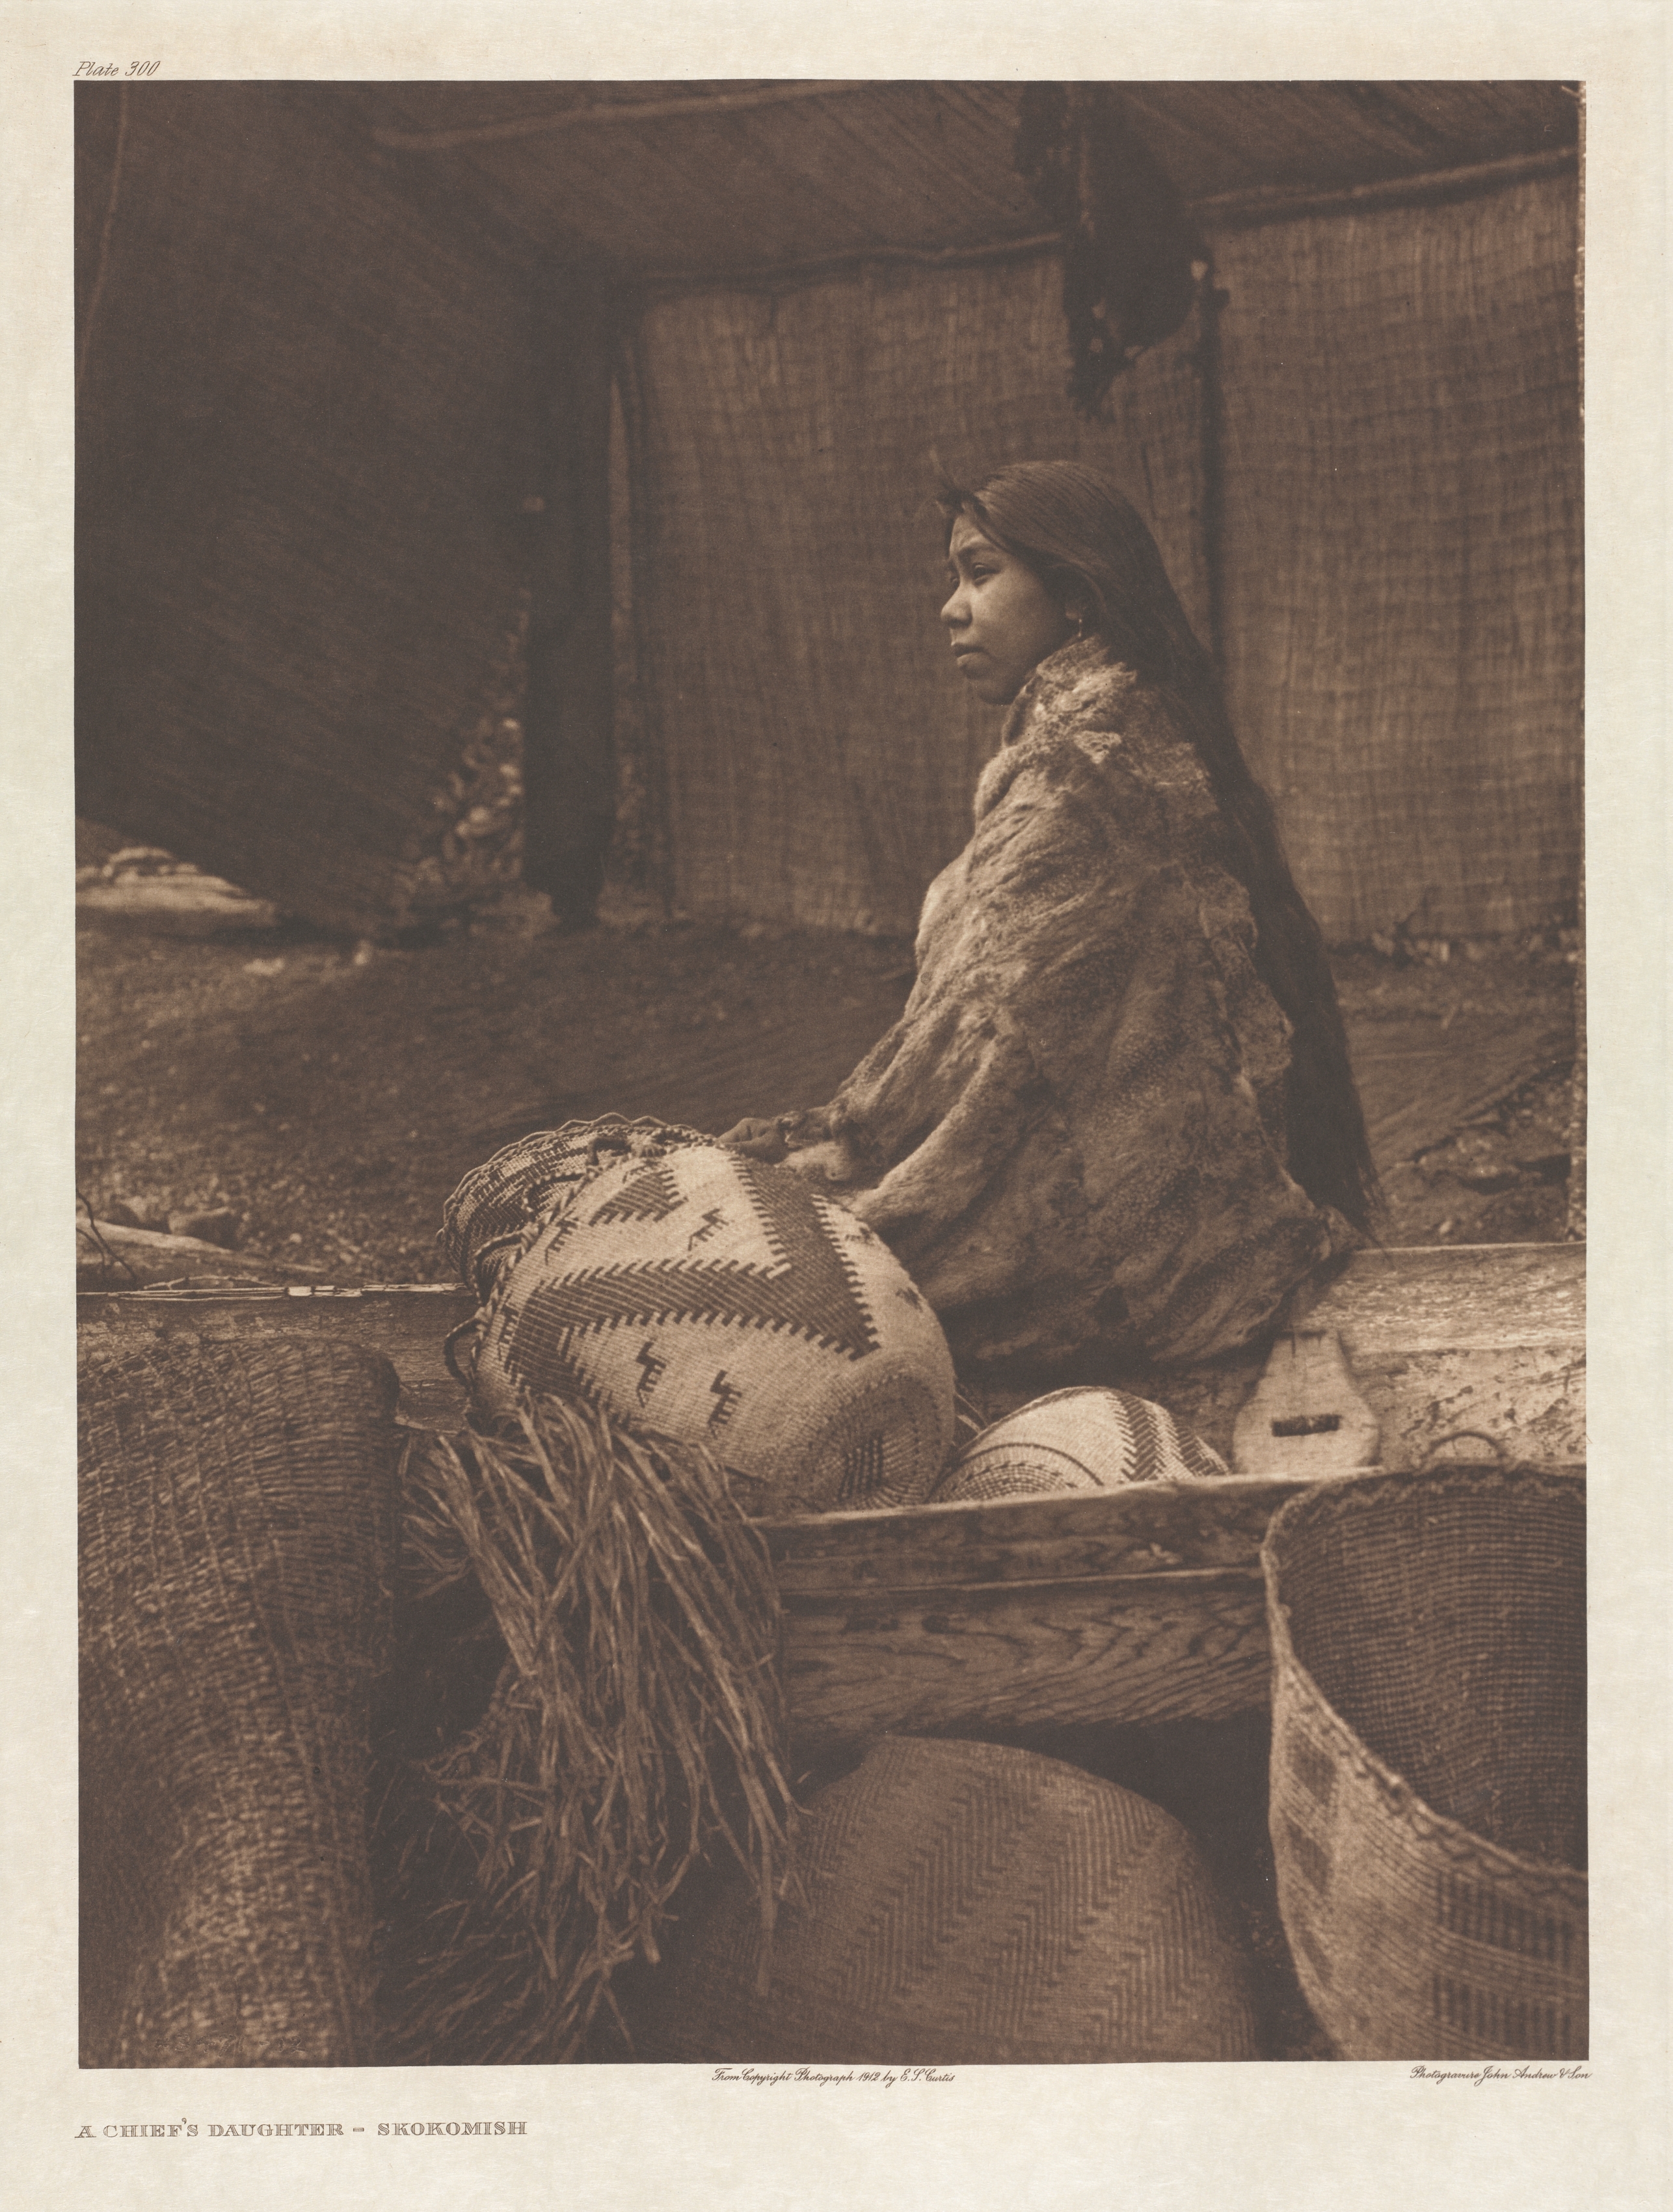 Portfolio IX, Plate 300: A Chief's Daughter - Skokomish